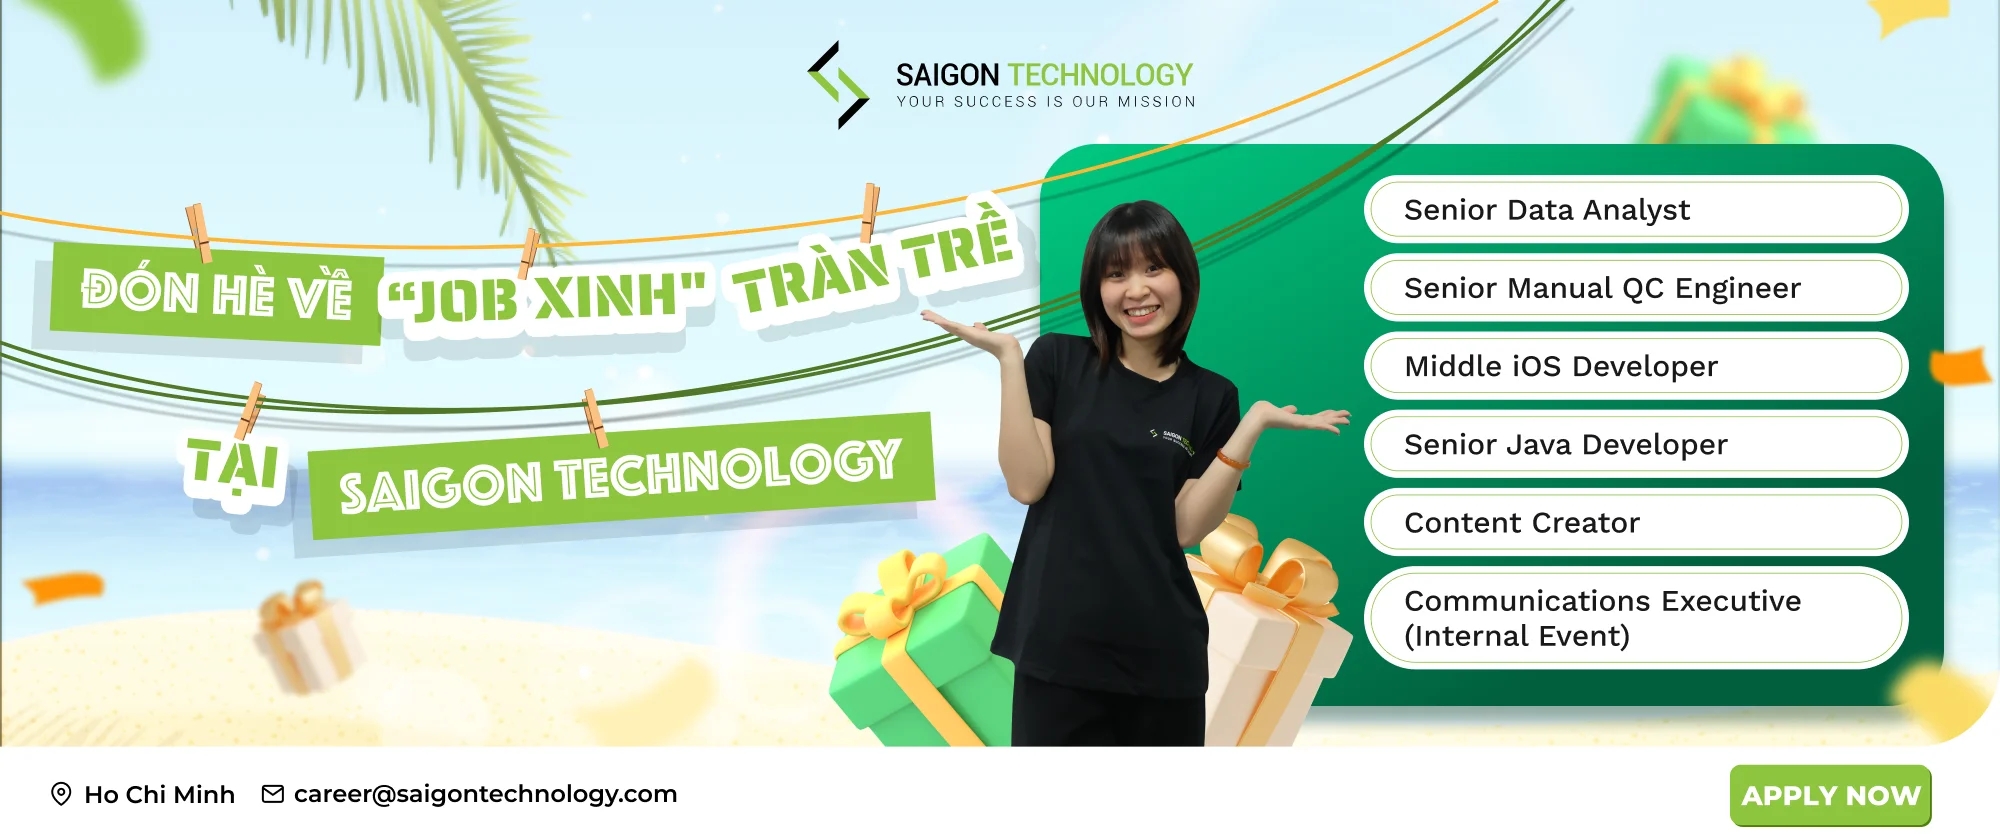 saigon_technology_0